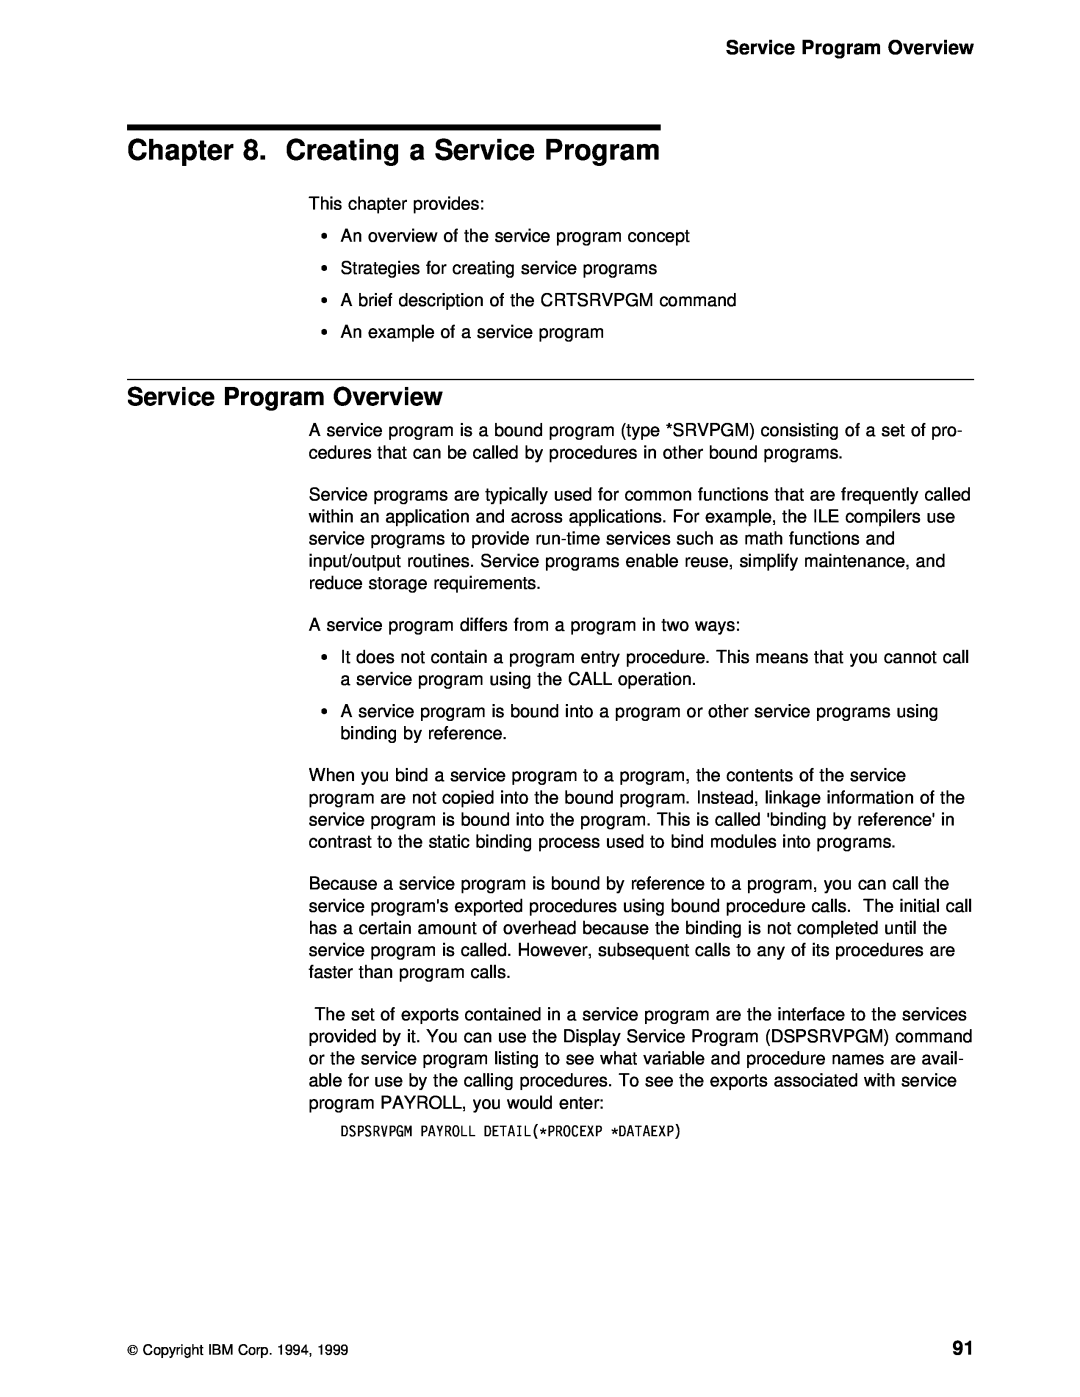 IBM AS/400 manual Creating a Service Program, Service Program Overview 